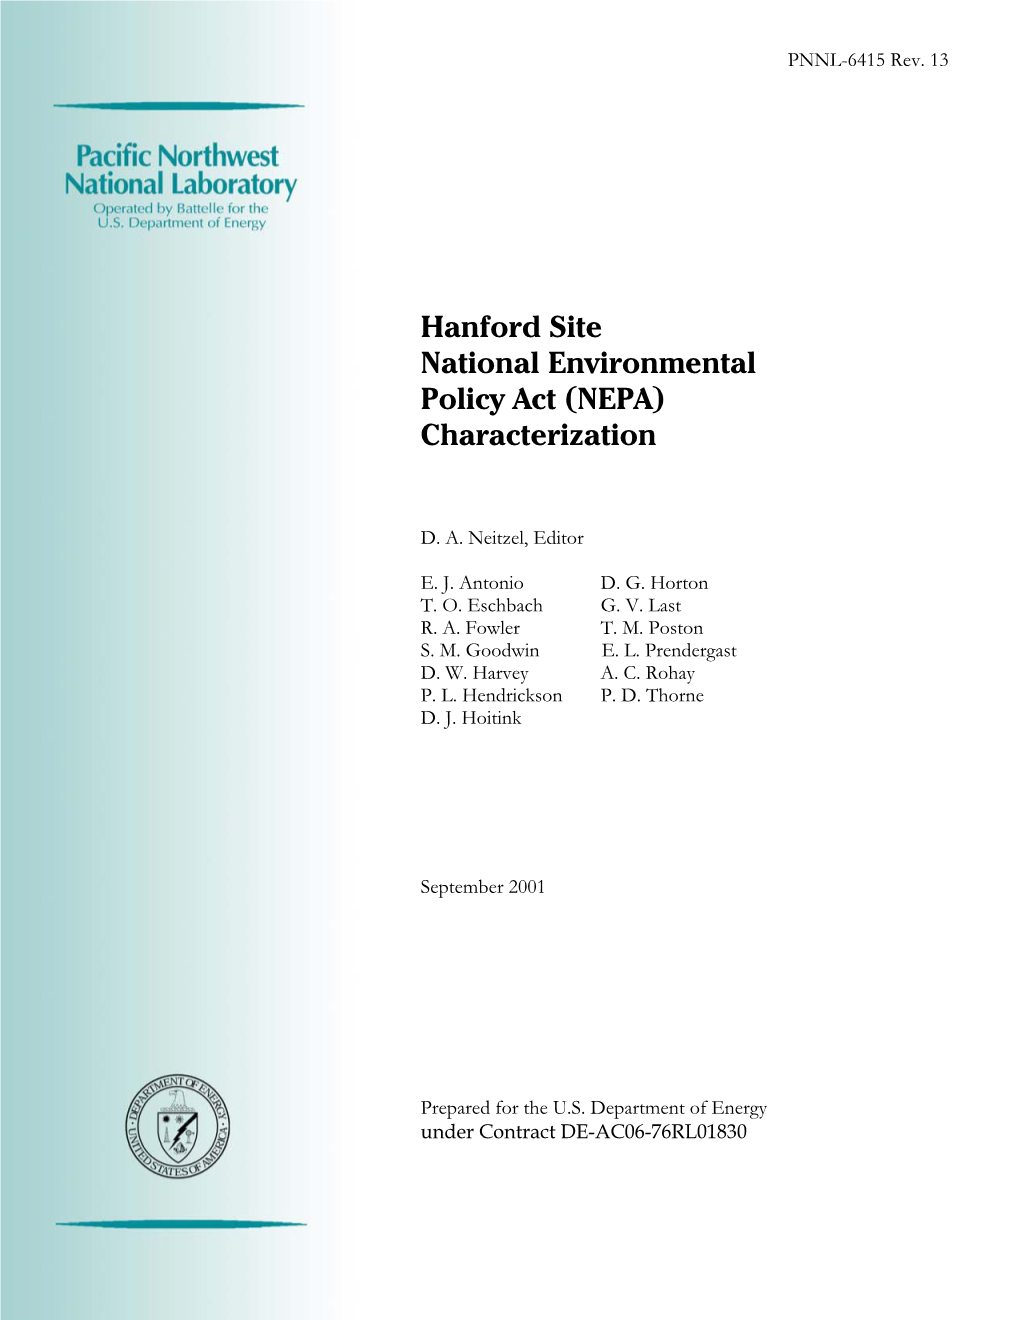 Hanford Site National Environmental Policy Act (NEPA) Characterization